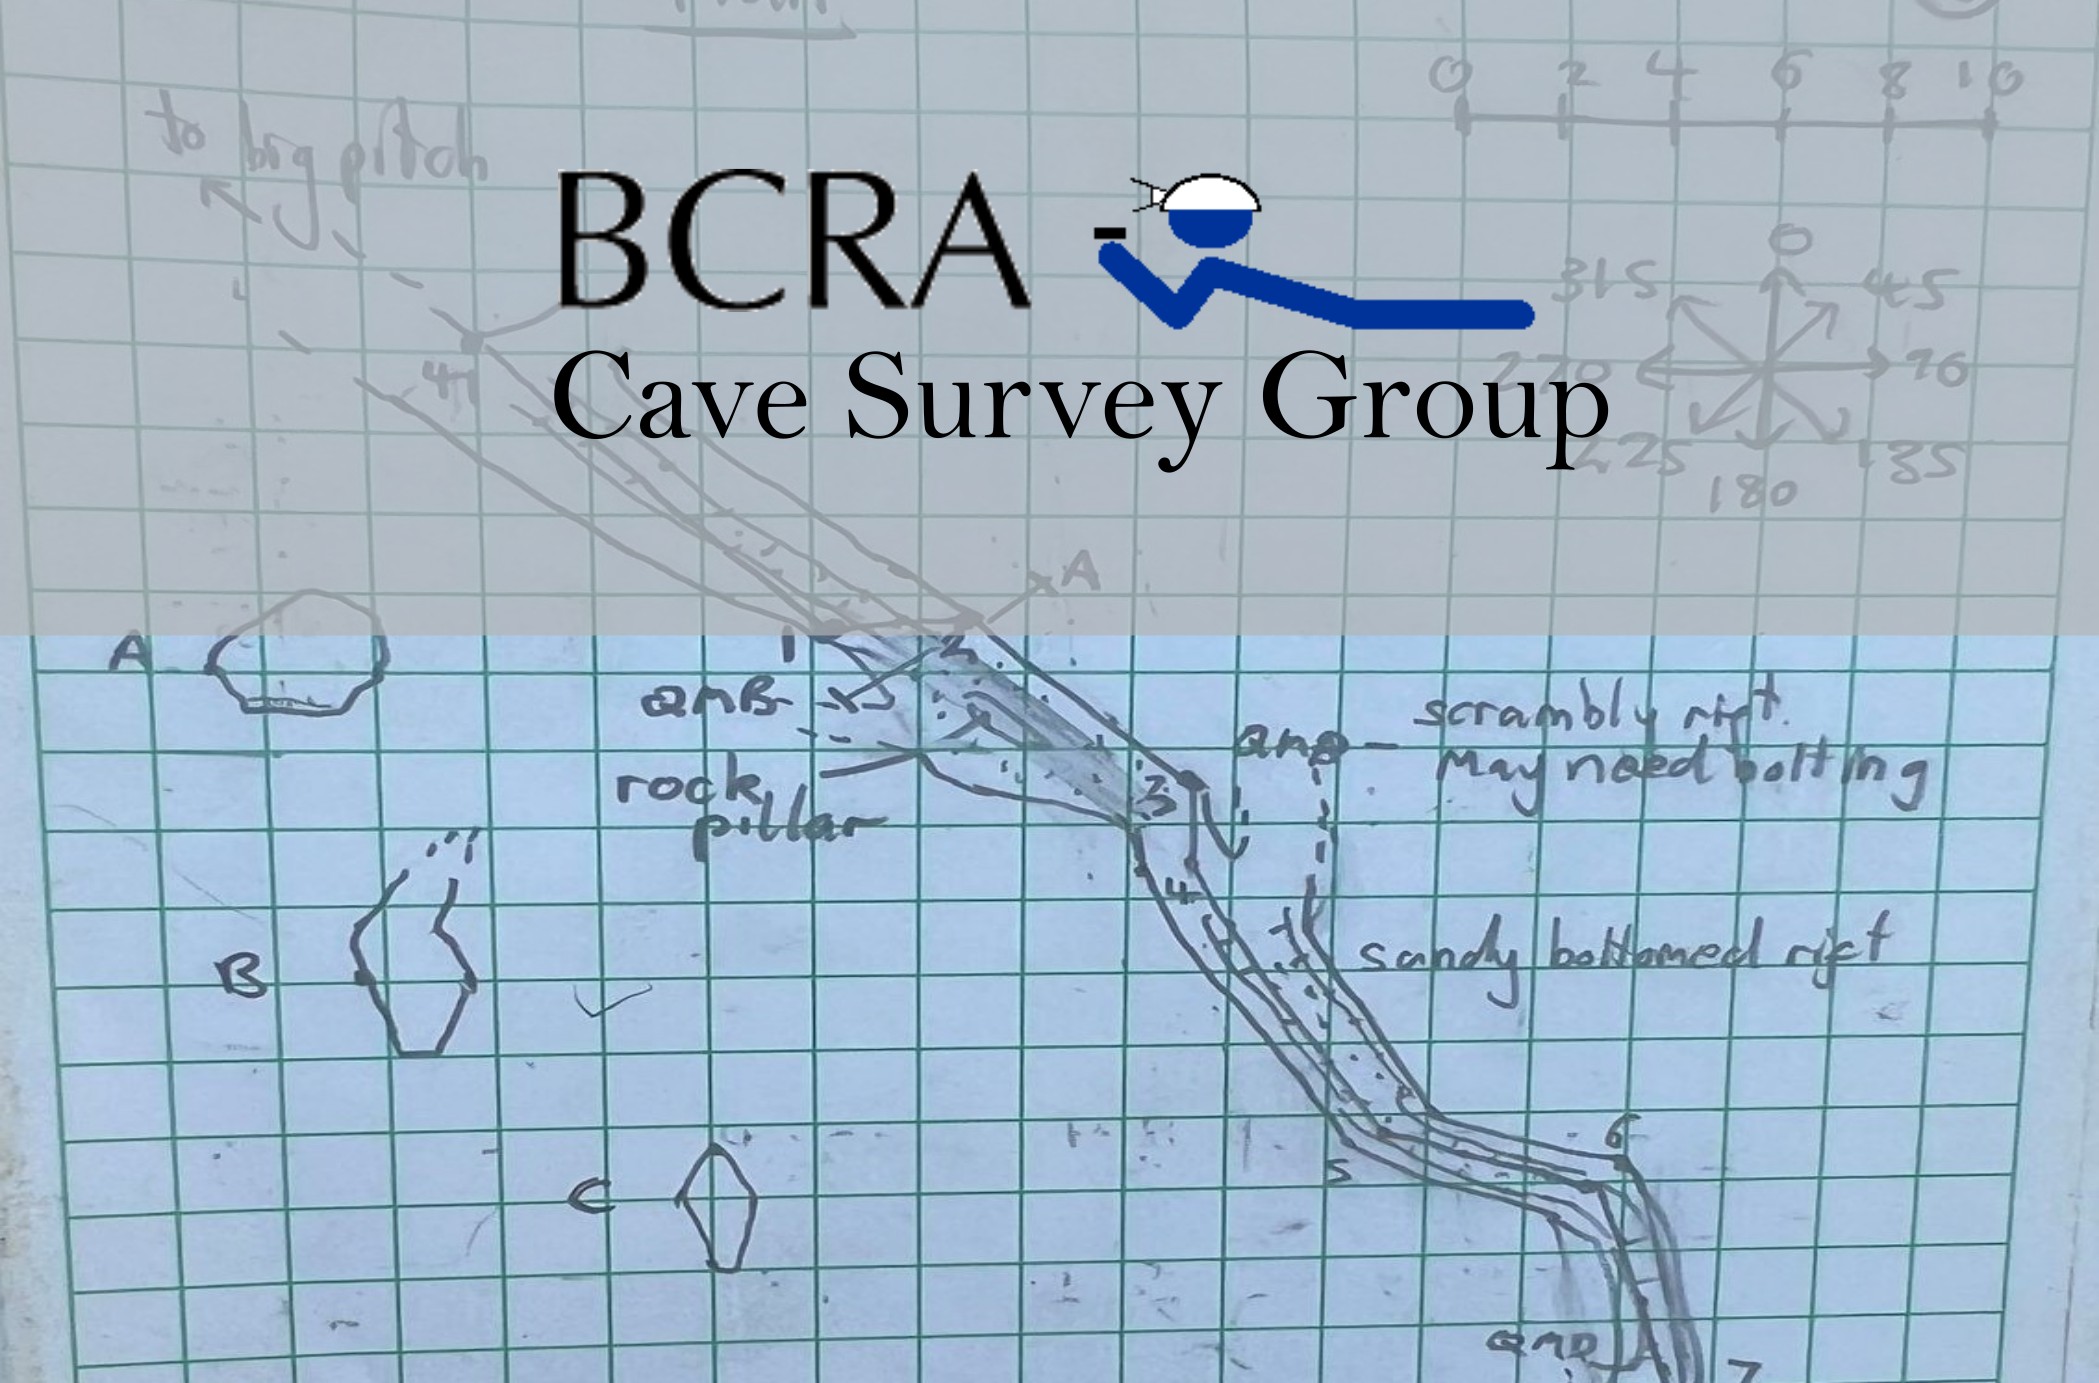 BCRA - Cave Survey Group Meet